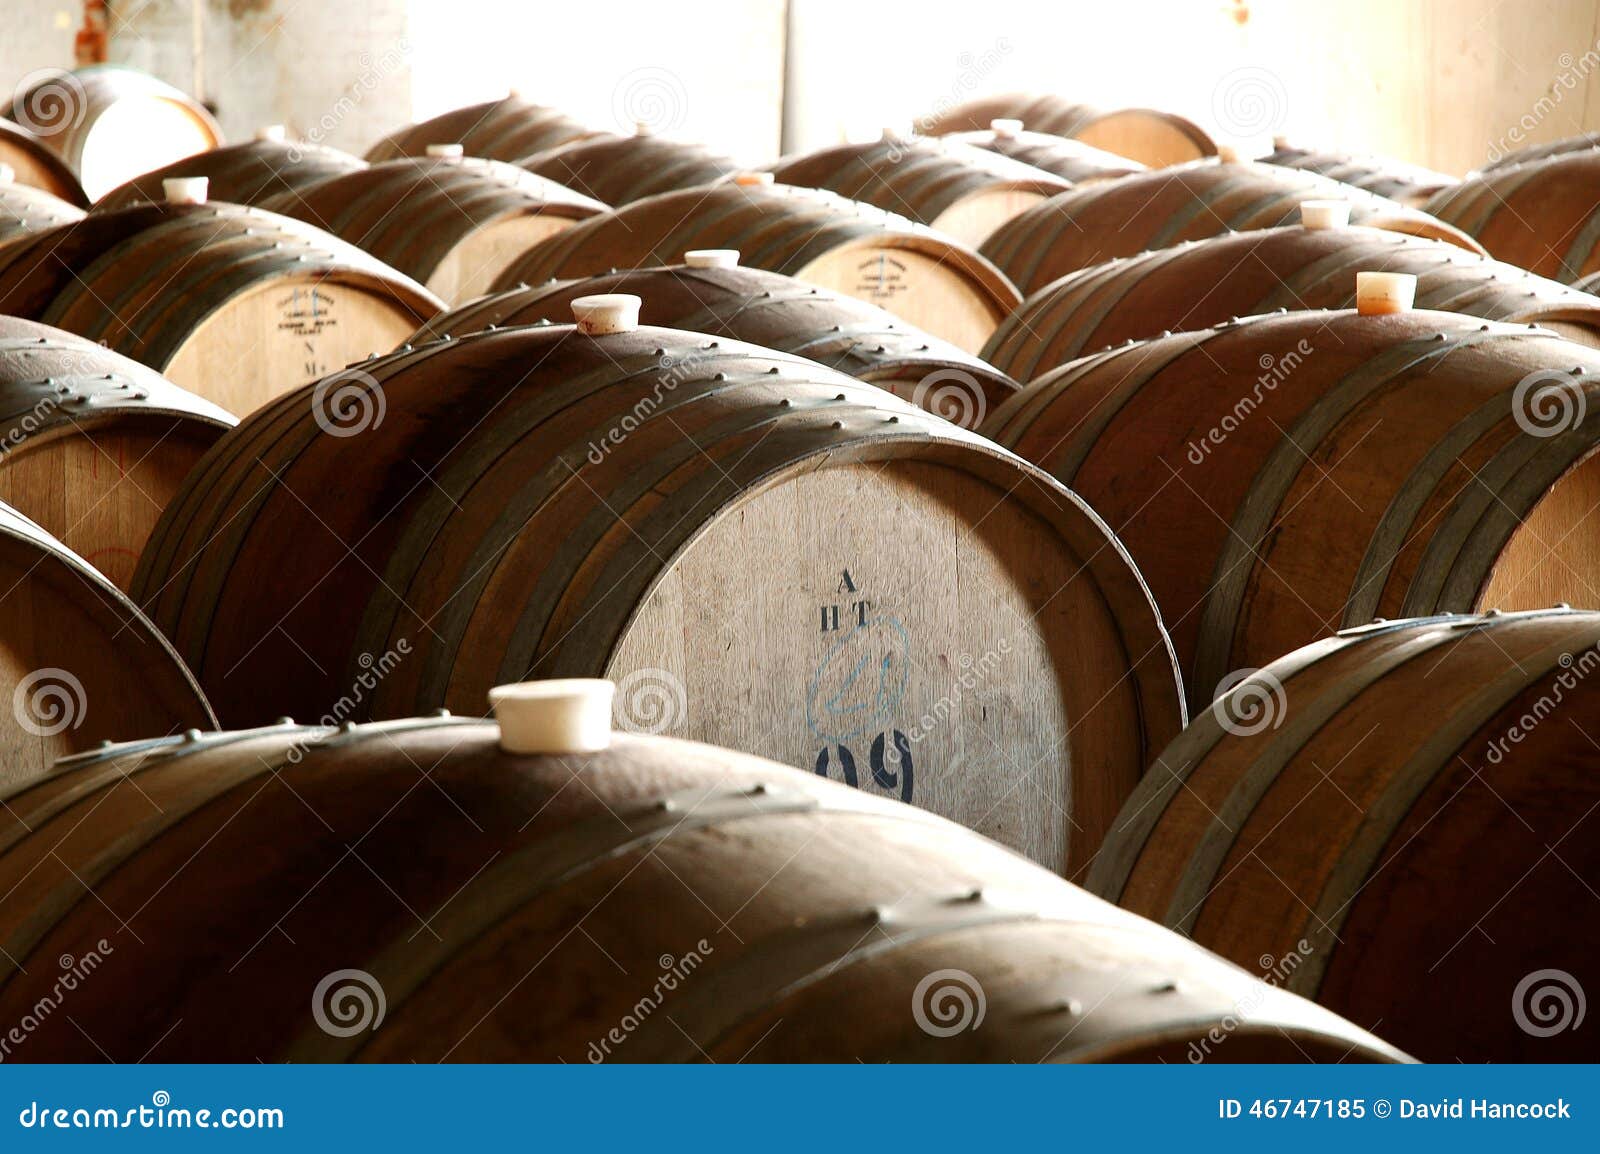 photo of historical wine barrels in cellar